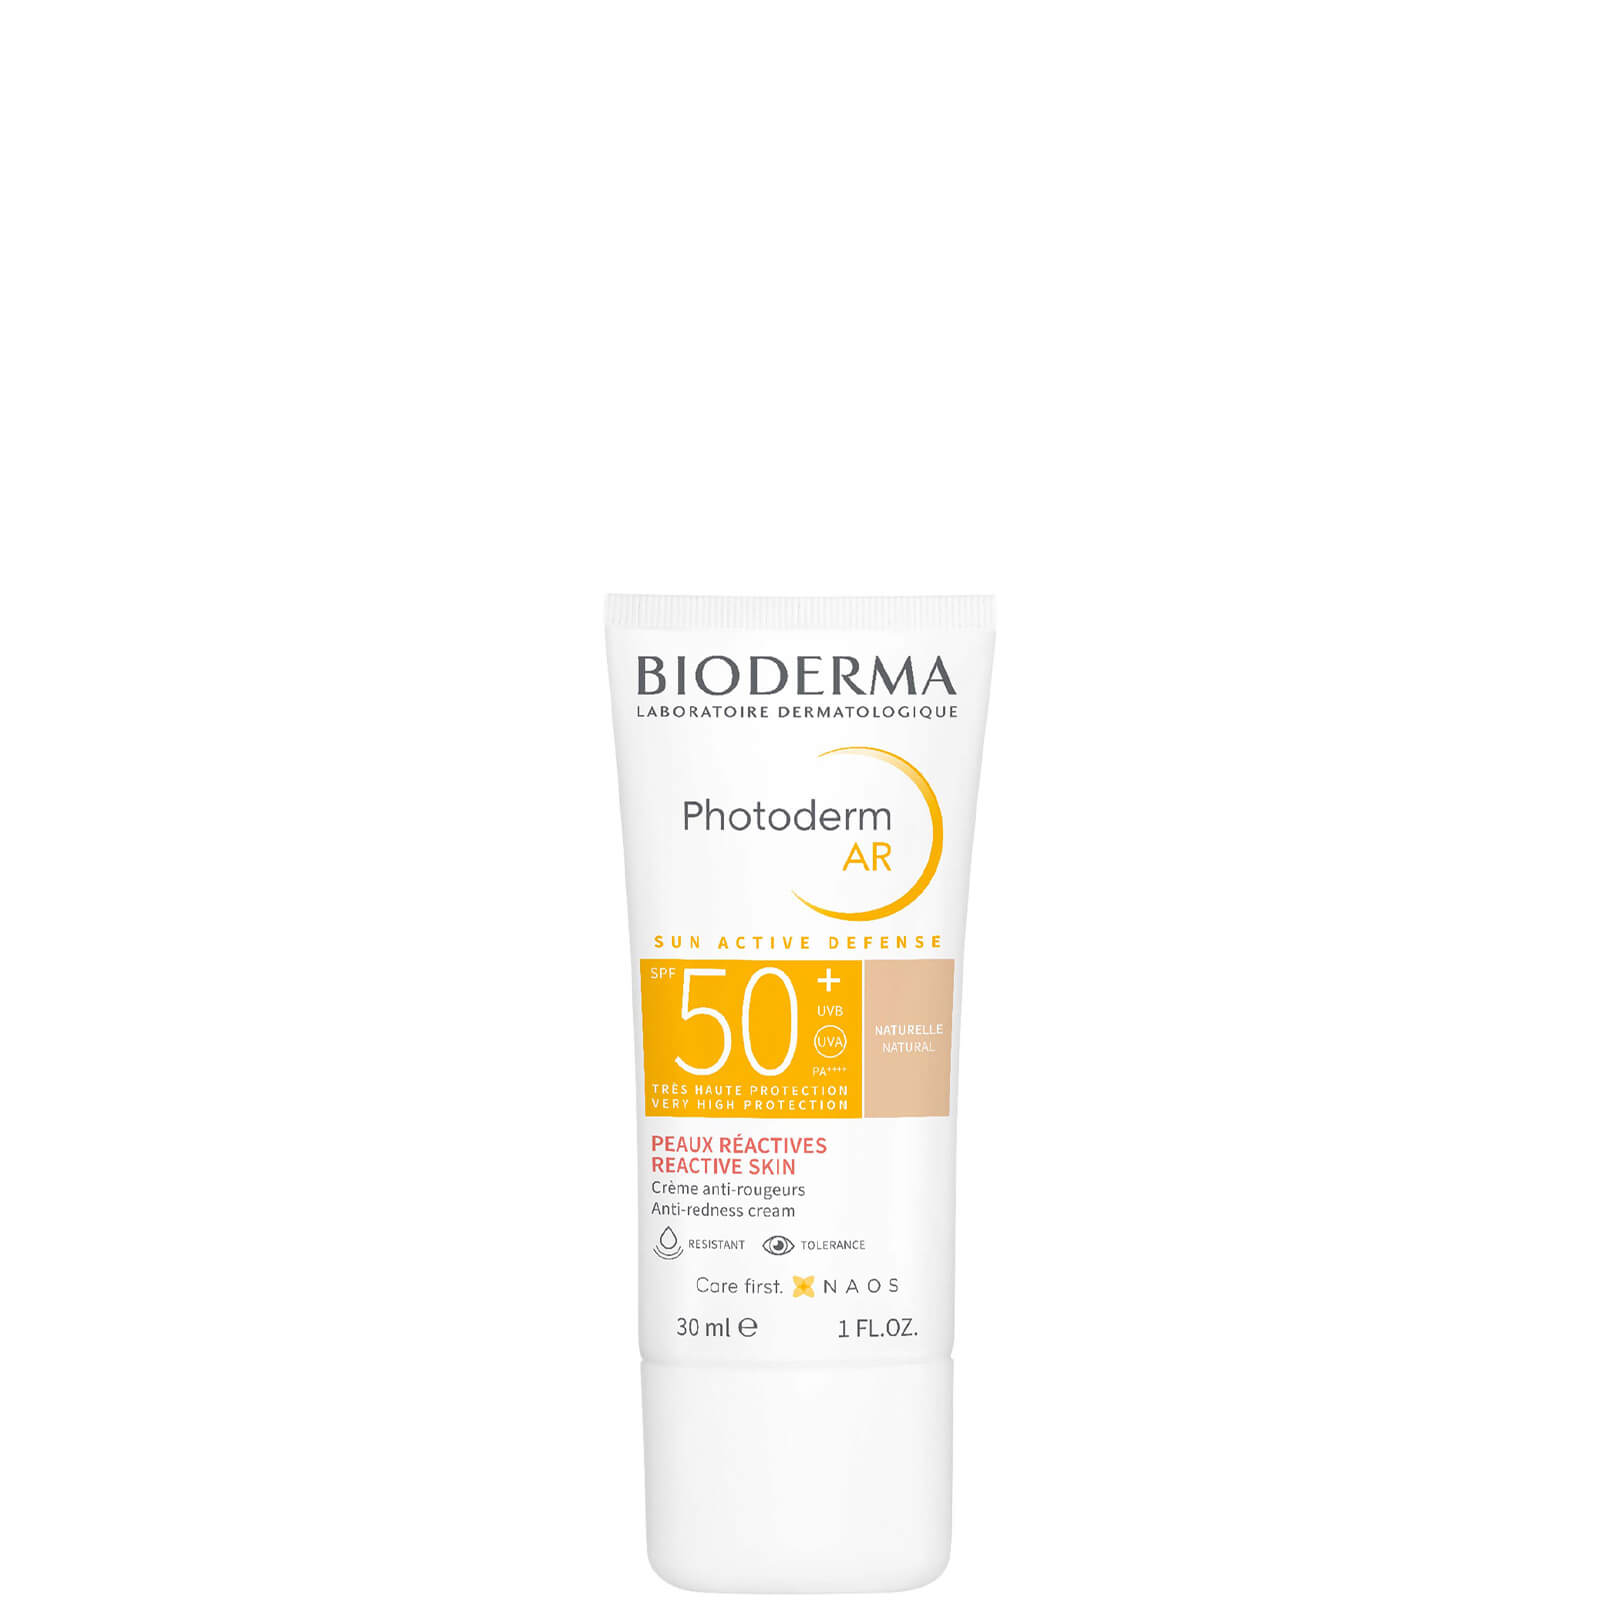 Image of Bioderma Photoderm Anti-Redness Tinted Sunscreen SPF50+ 30ml